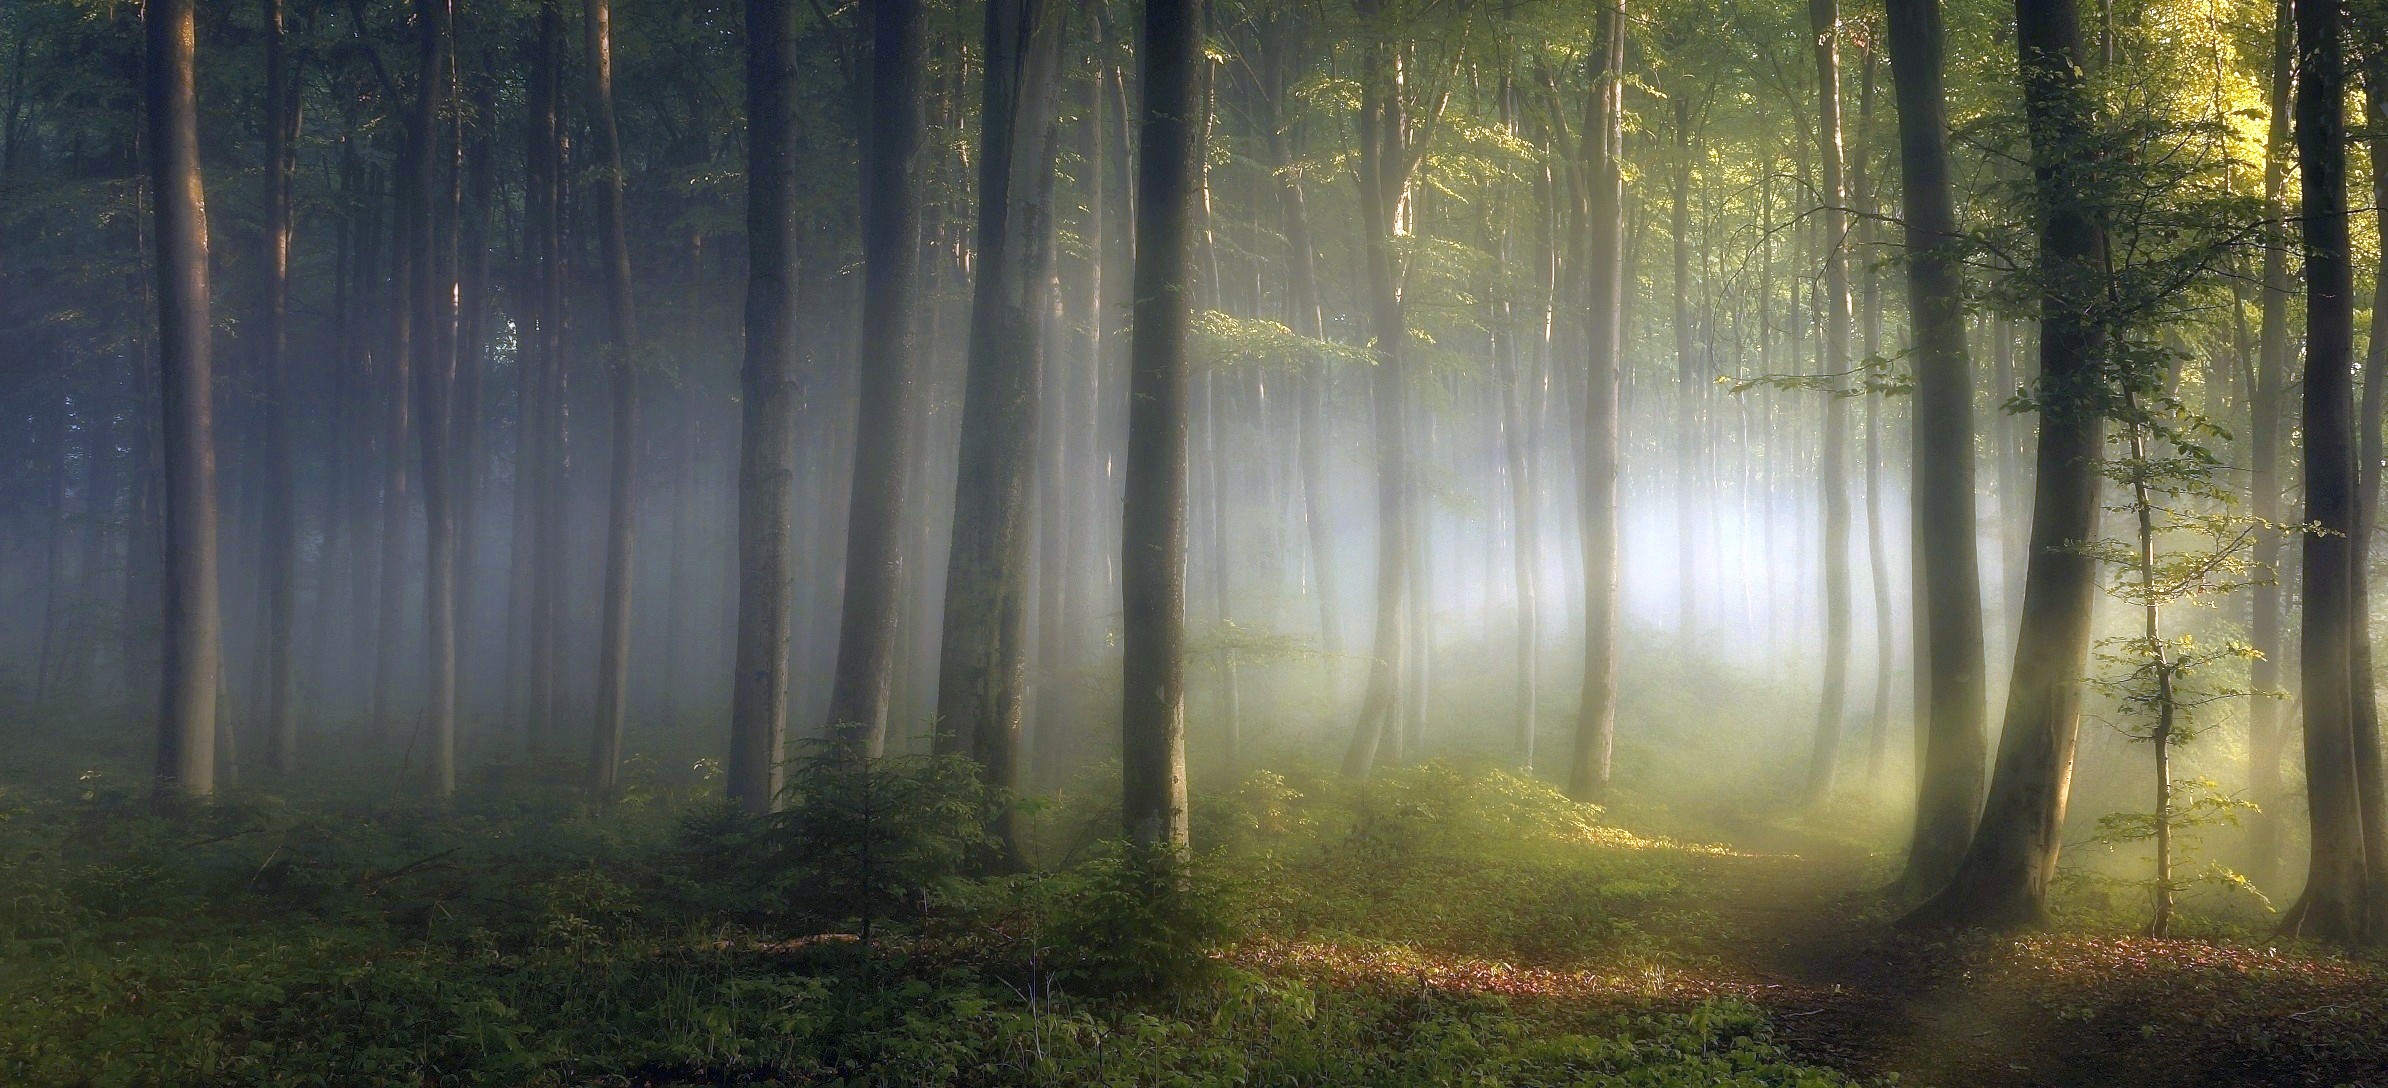 Morning Lights Forest Shrubs Trees Path Mist Leaves Green Nature Landscape 2388x1088